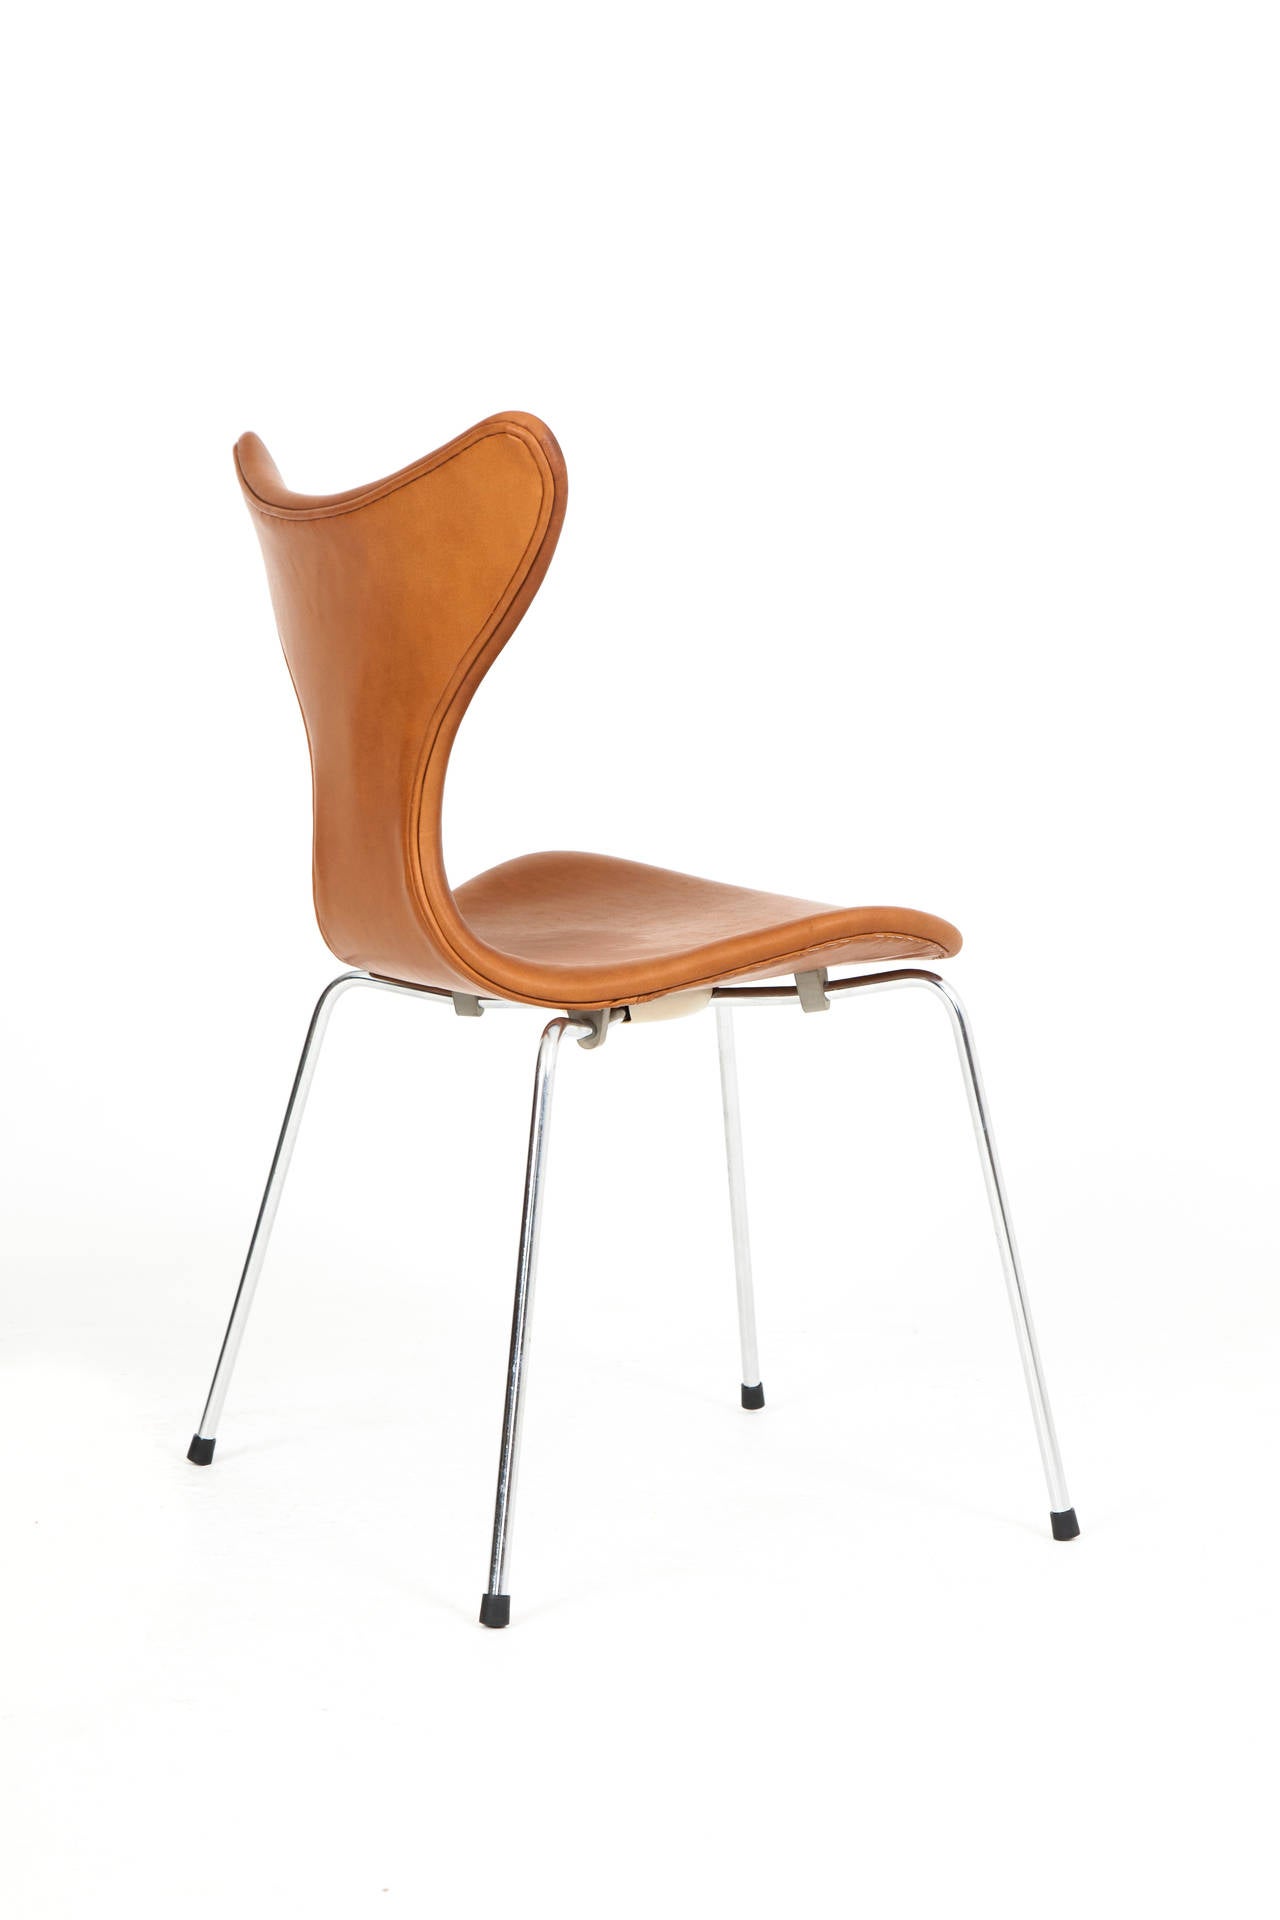 Danish Arne Jacobsen Set of Eight Seagull Chairs